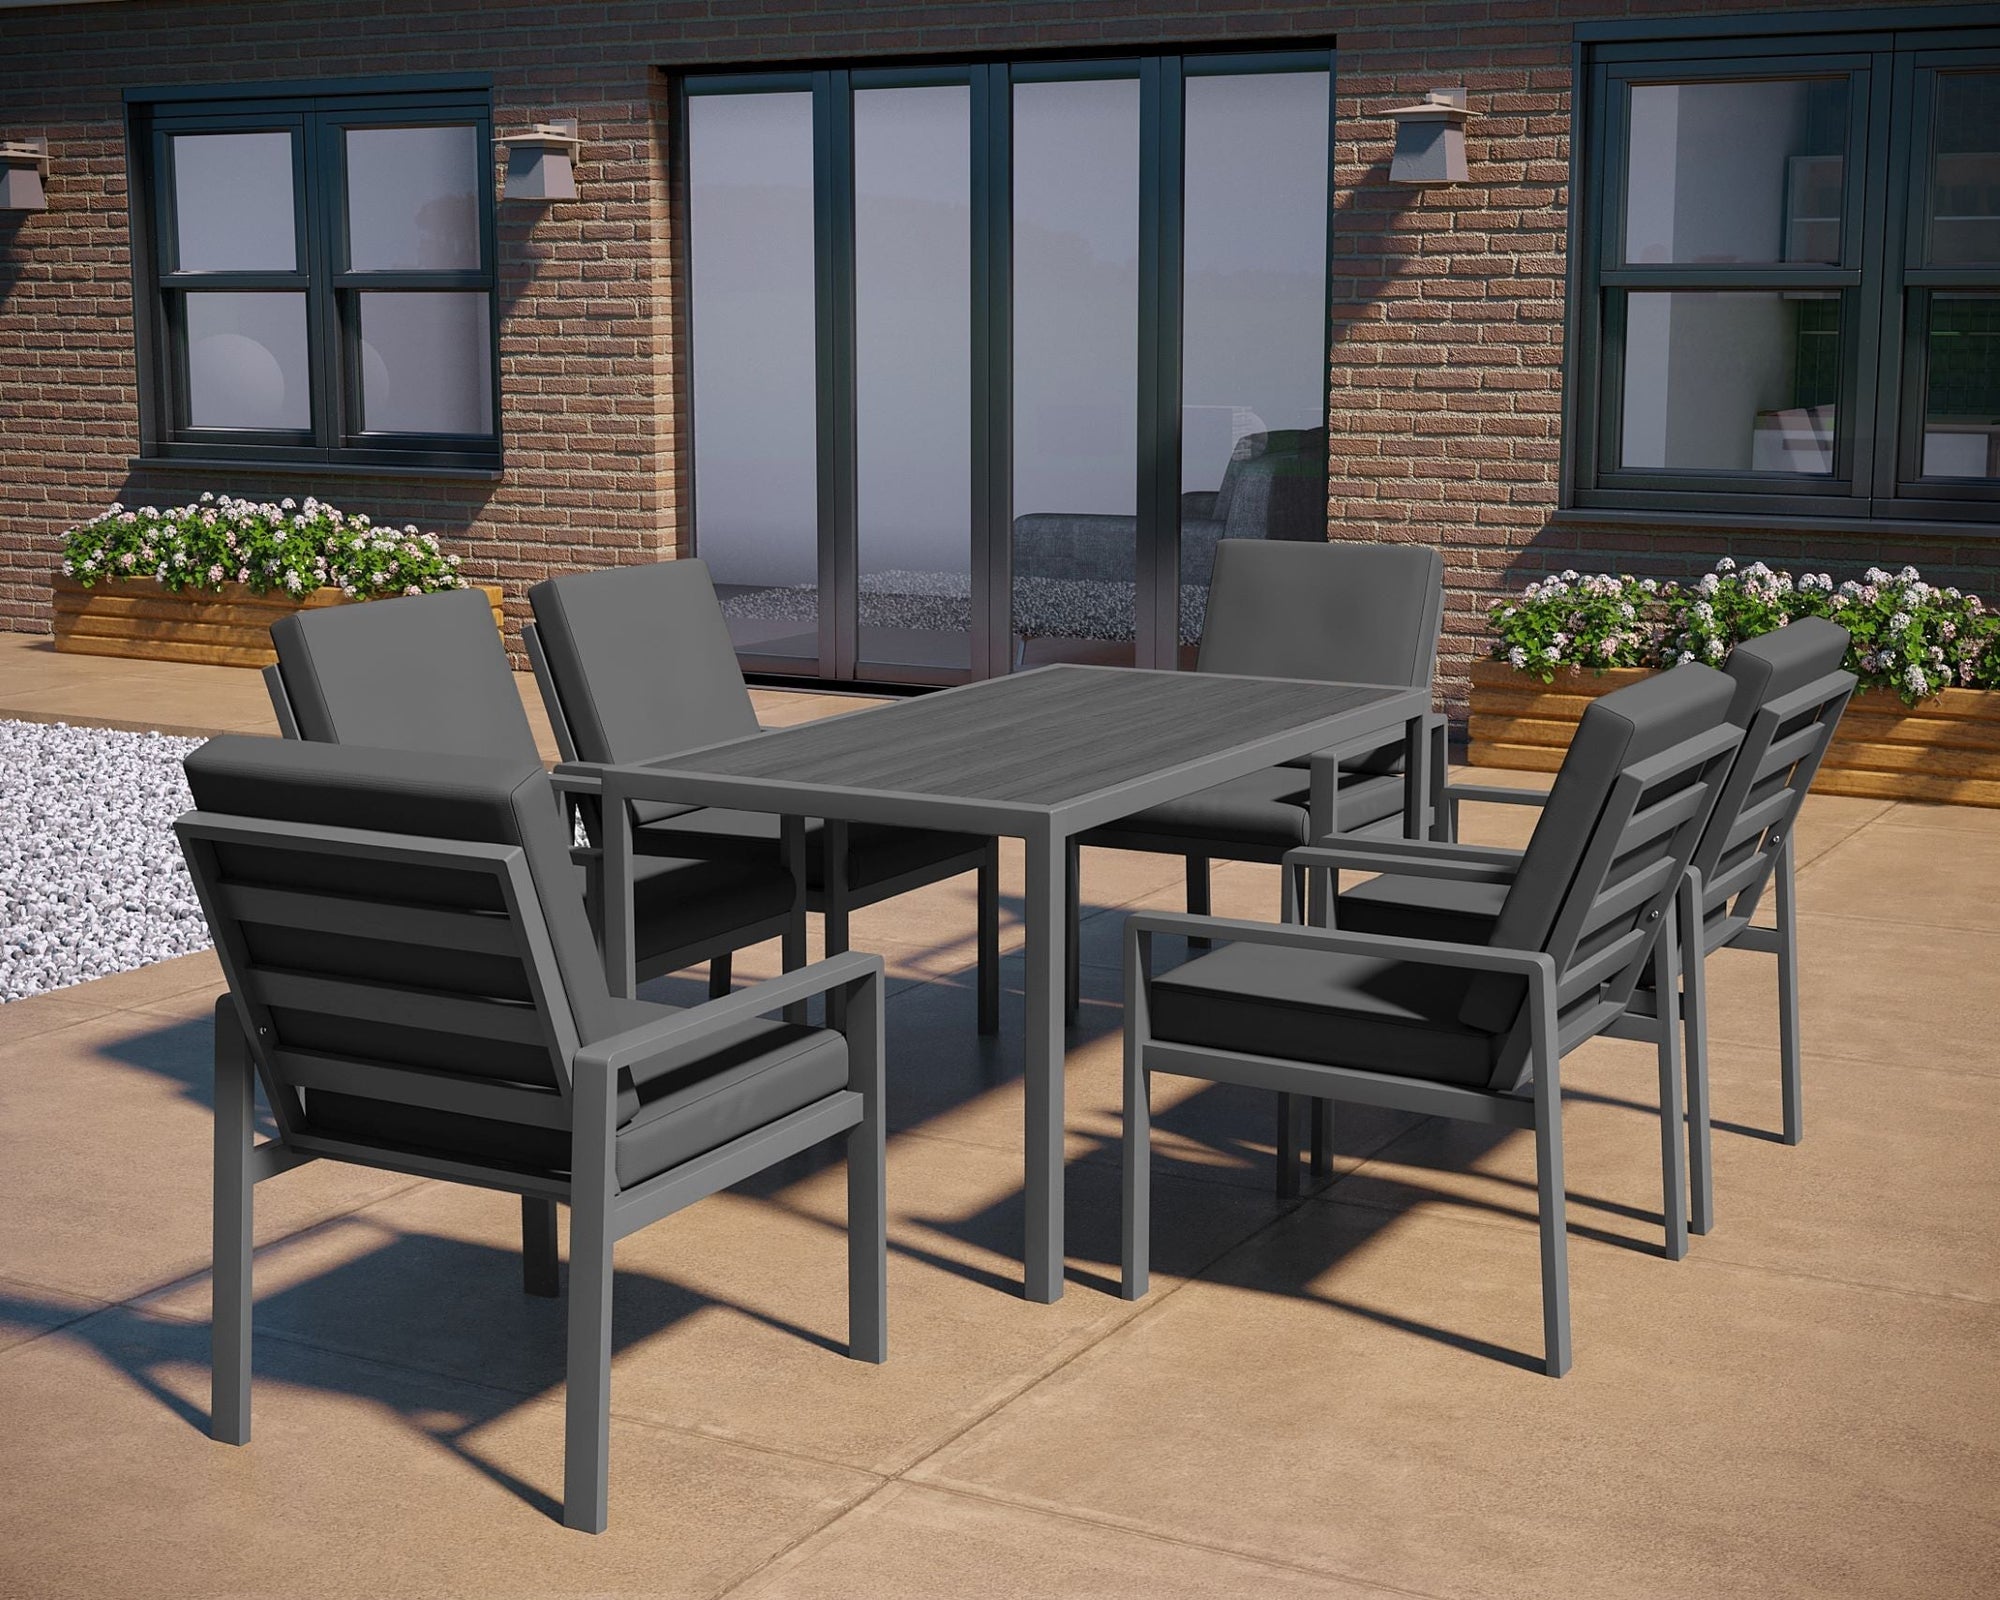 Aluminium Dining Table & 6 Chairs Set - Grey / Dark Rattan Furniture MaxiFurn 